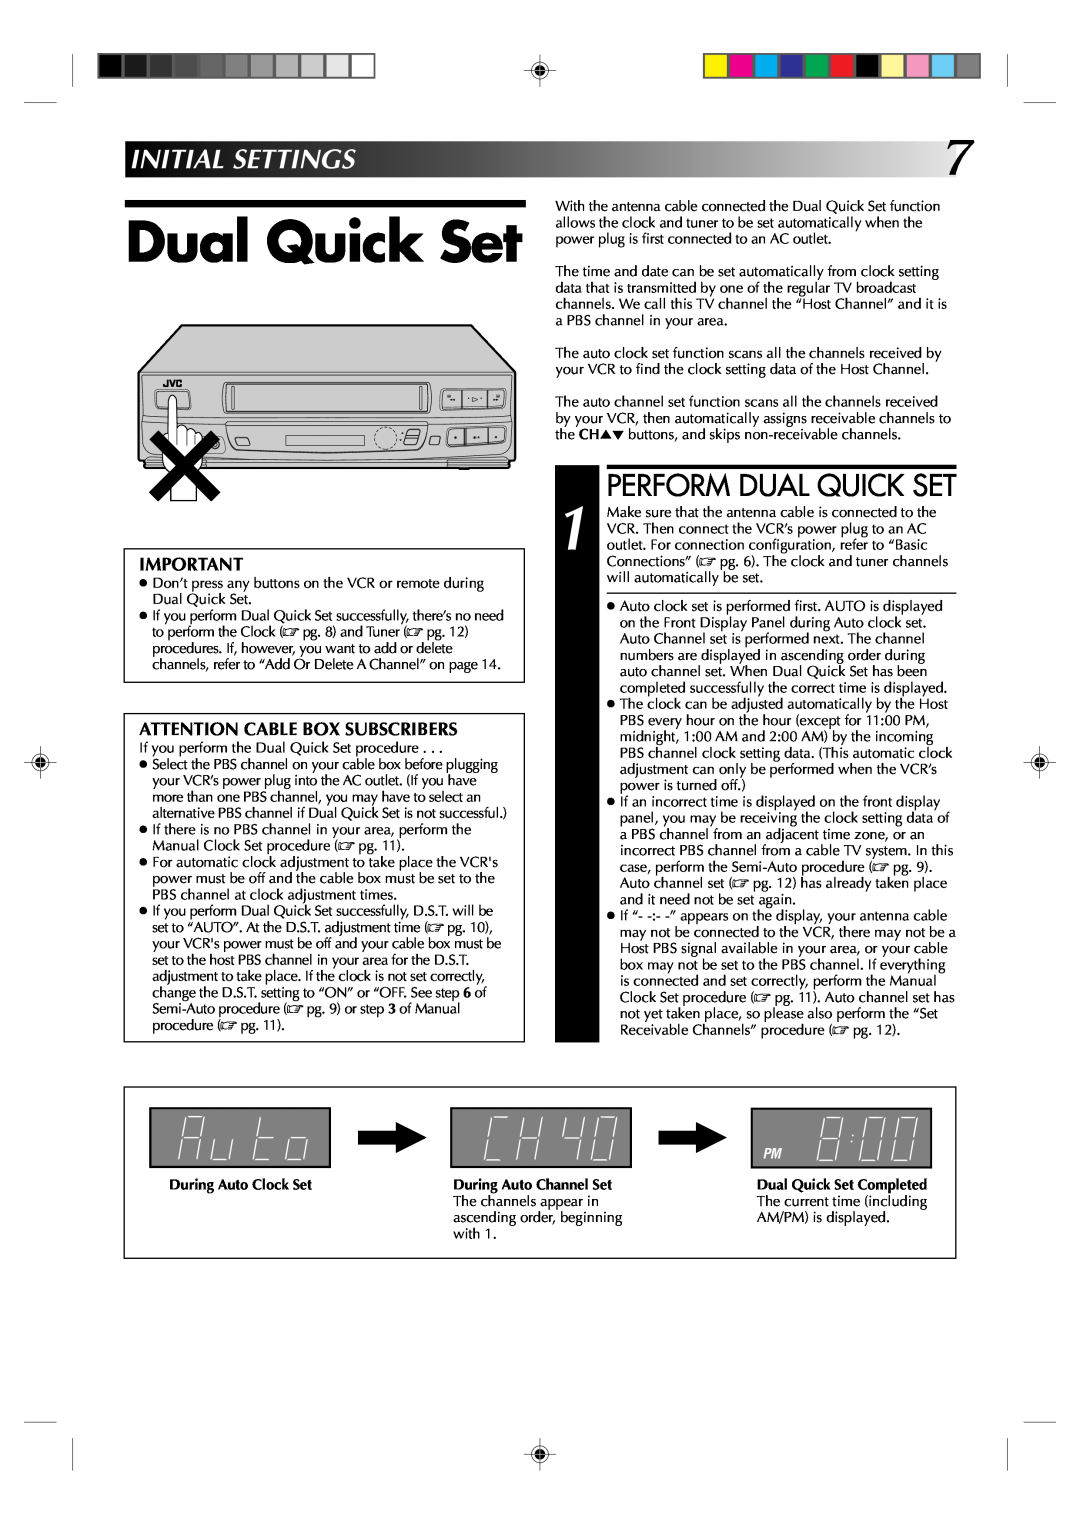 JVC HR-VP434U manual Perform Dual Quick Set, INITIALSETTINGS7, During Auto Clock Set 